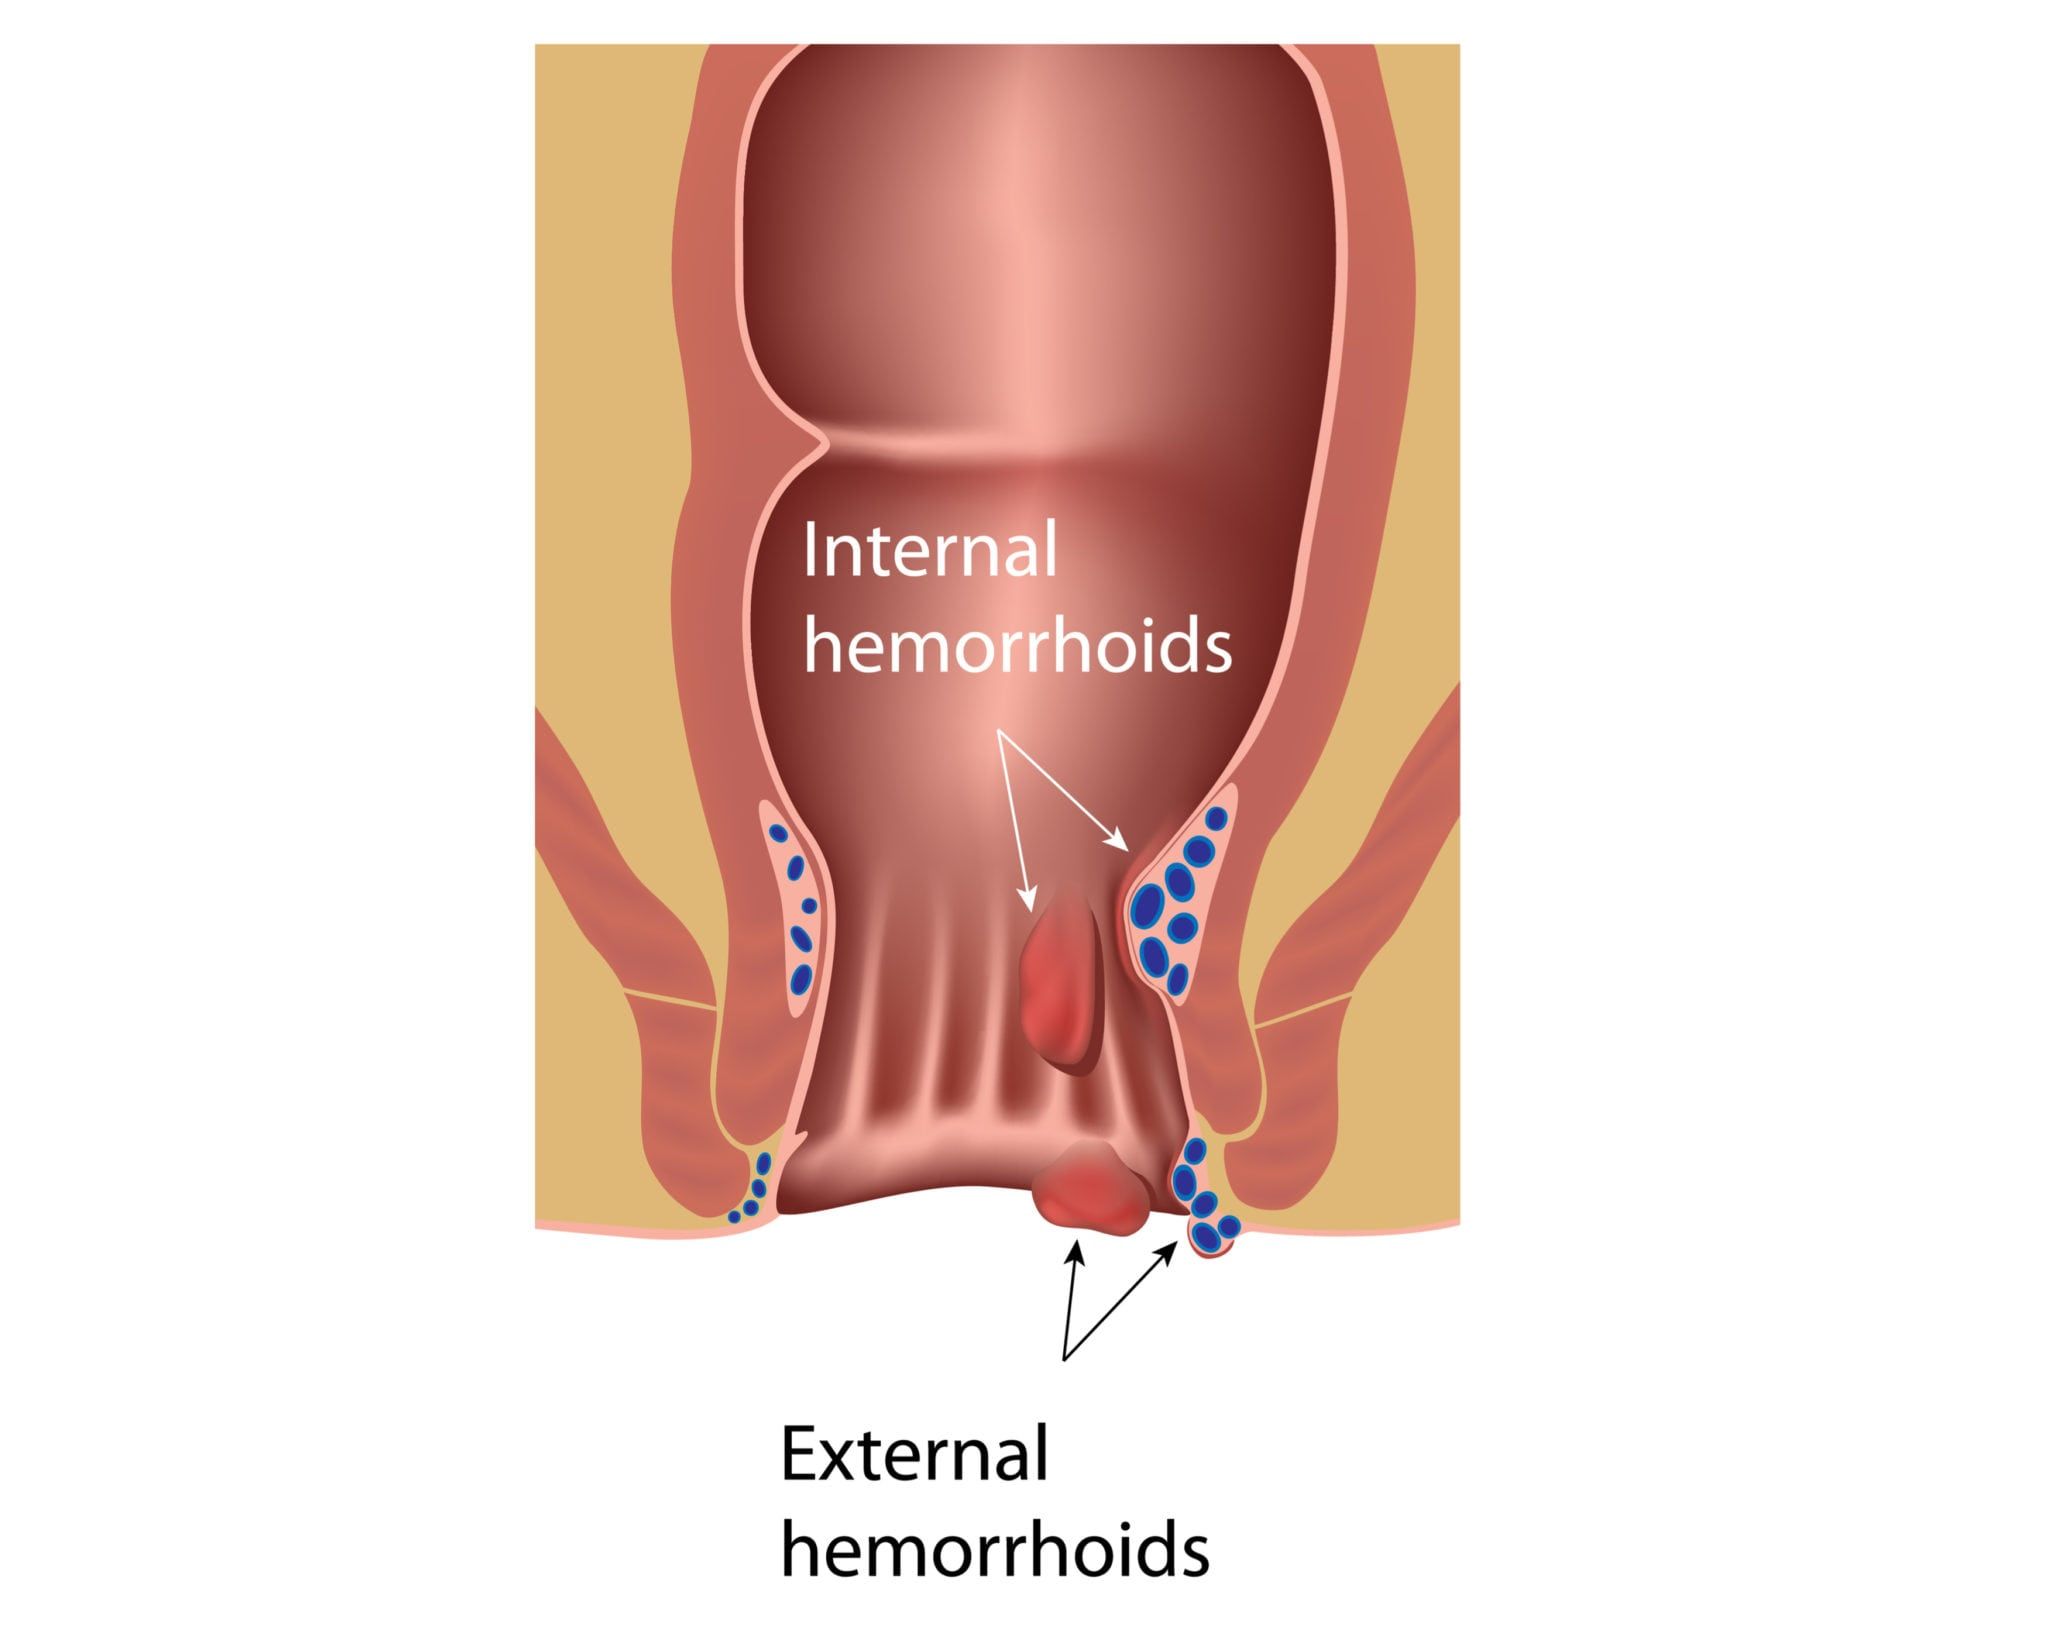 Illustrated image of rectum with Hemorrhoids